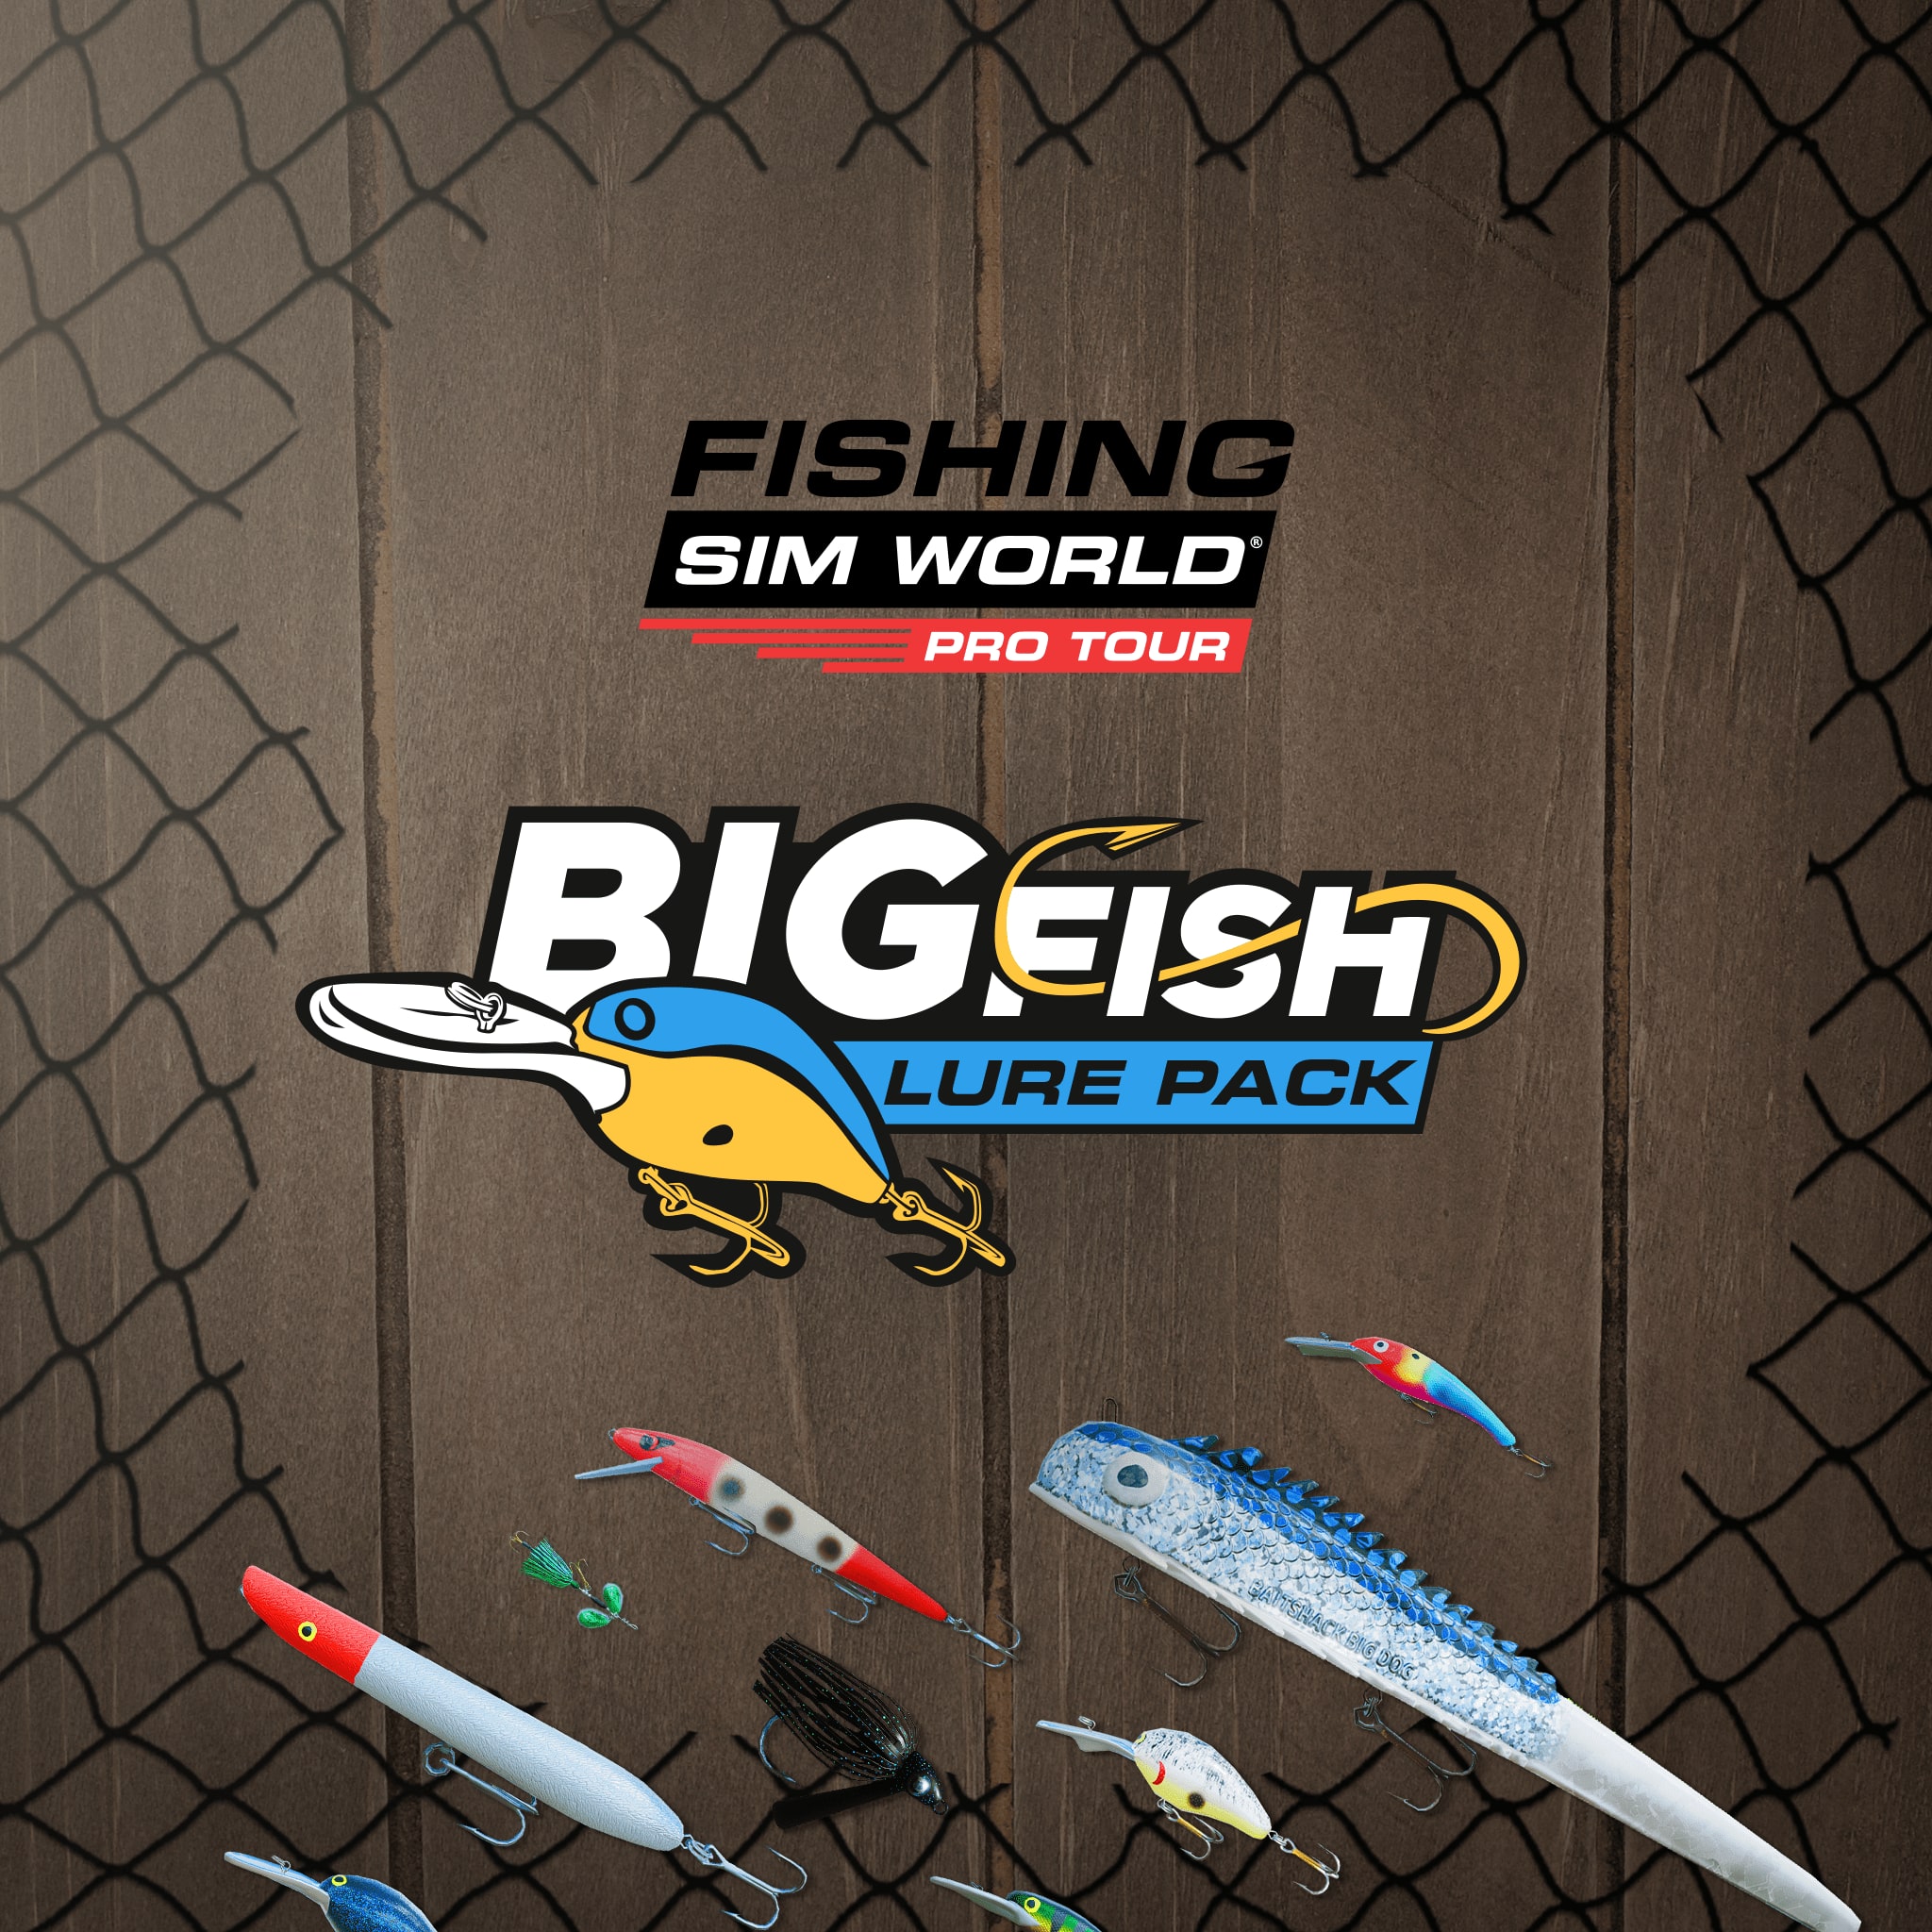 Fishing Sim World: Pro Tour on PS4 — price history, screenshots